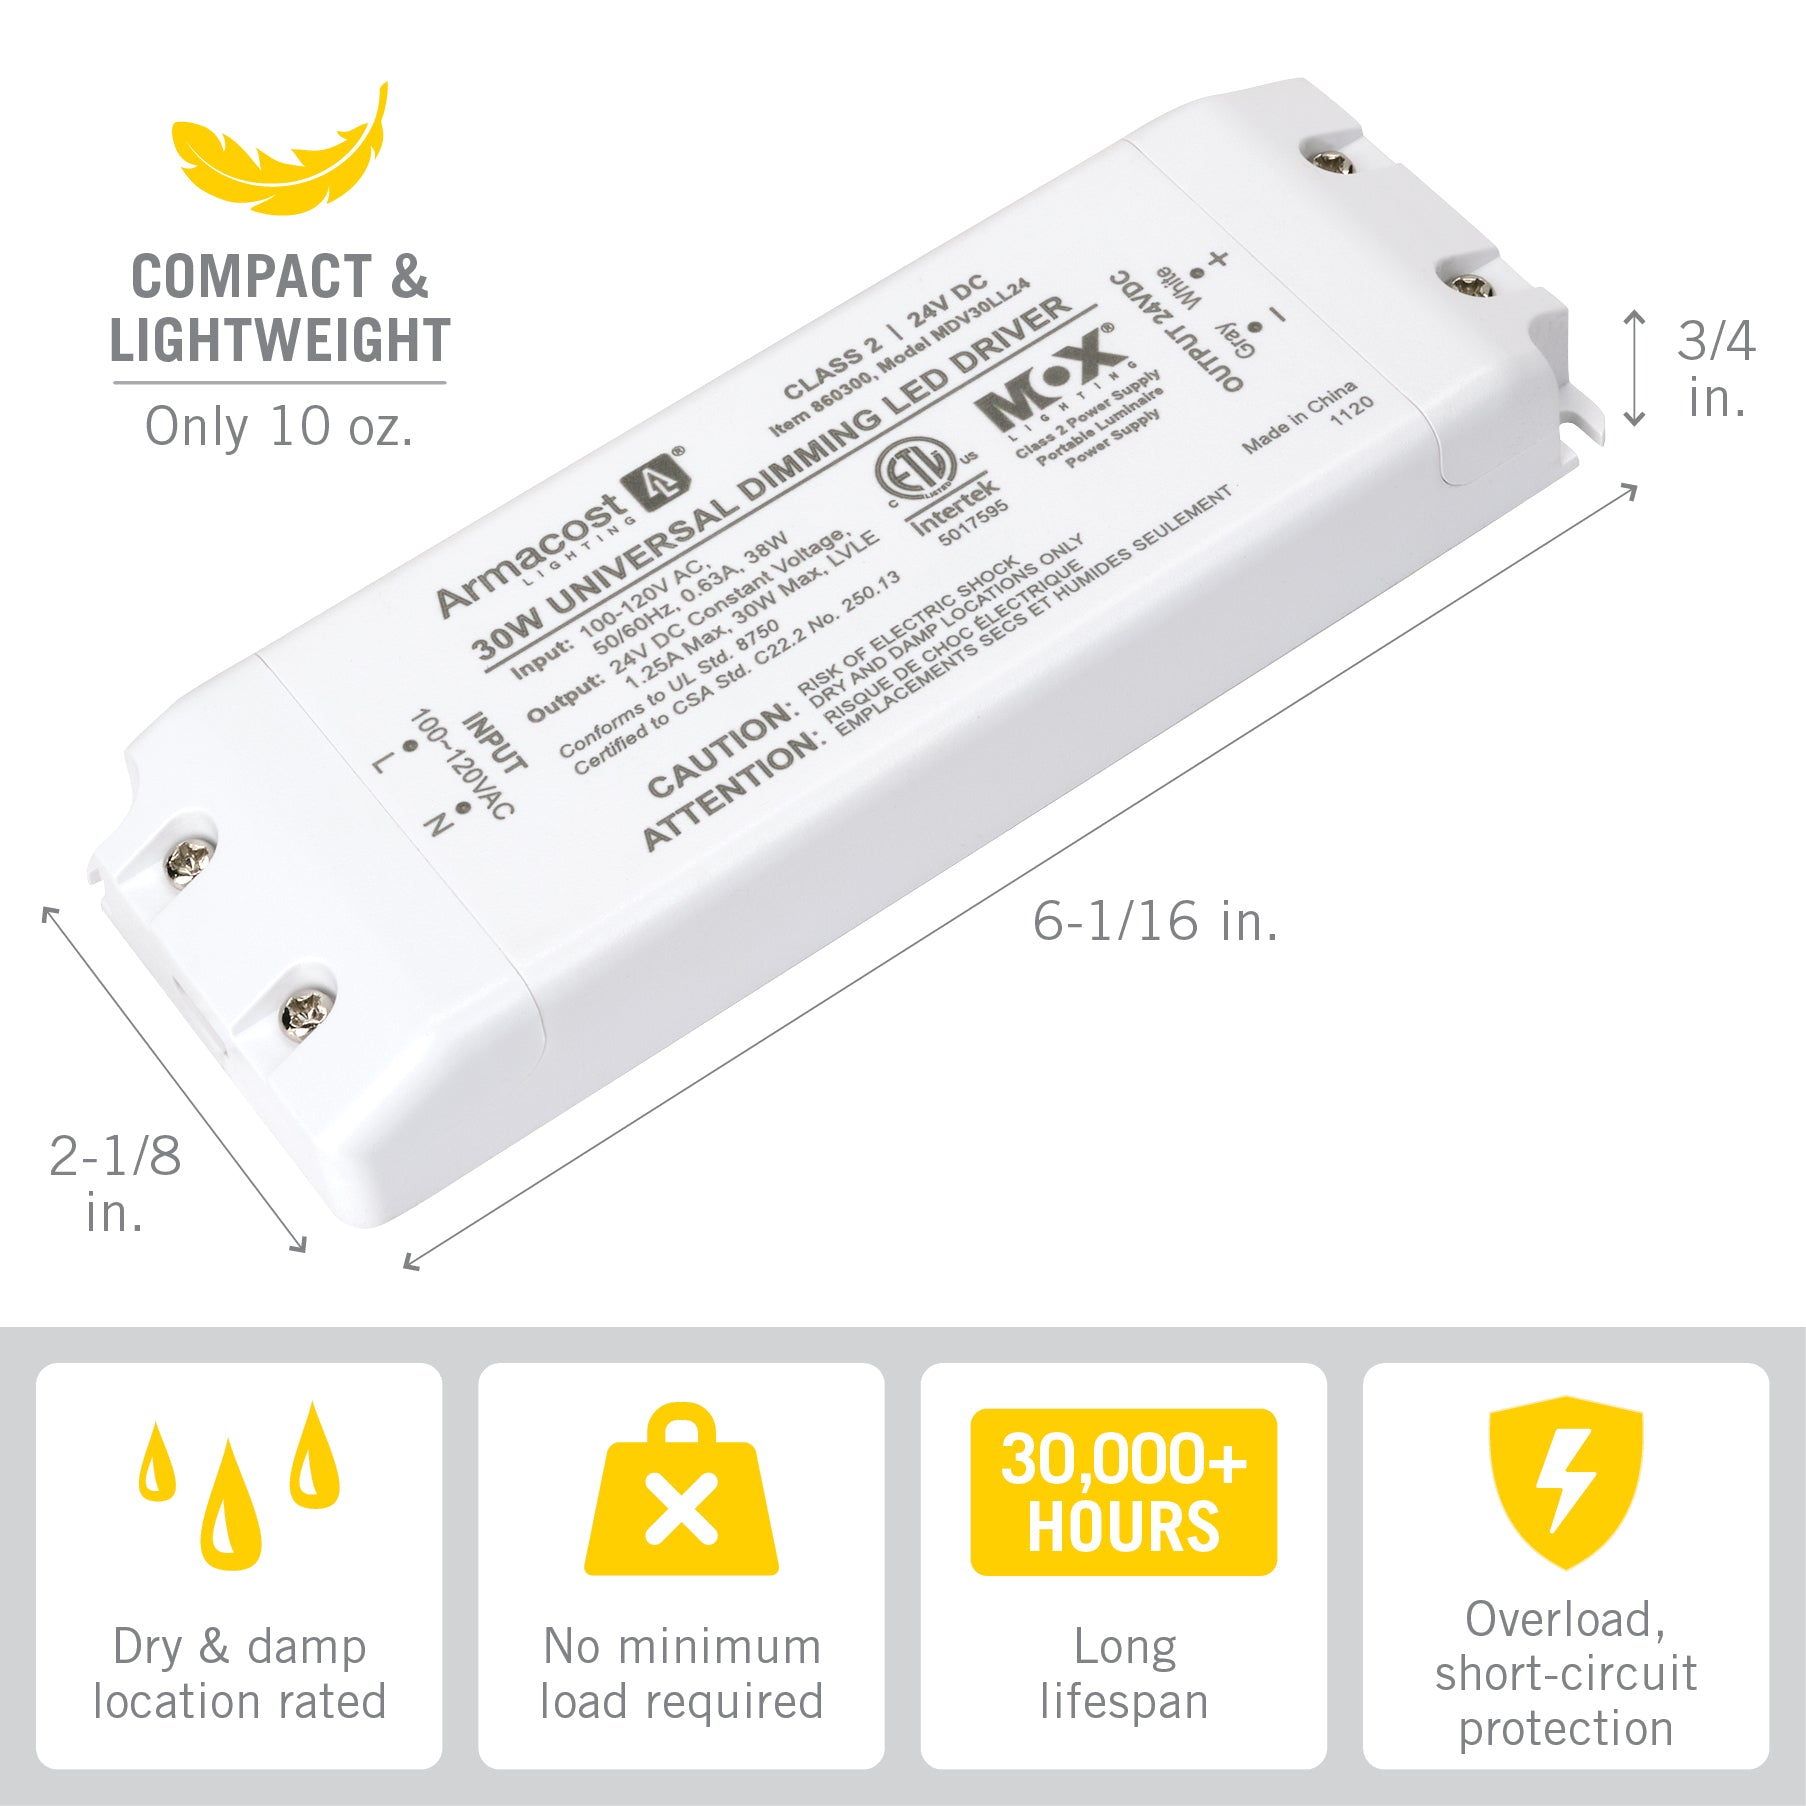 Armacost Lighting 860450 45-Watt Universal Dimming LED Power Supply